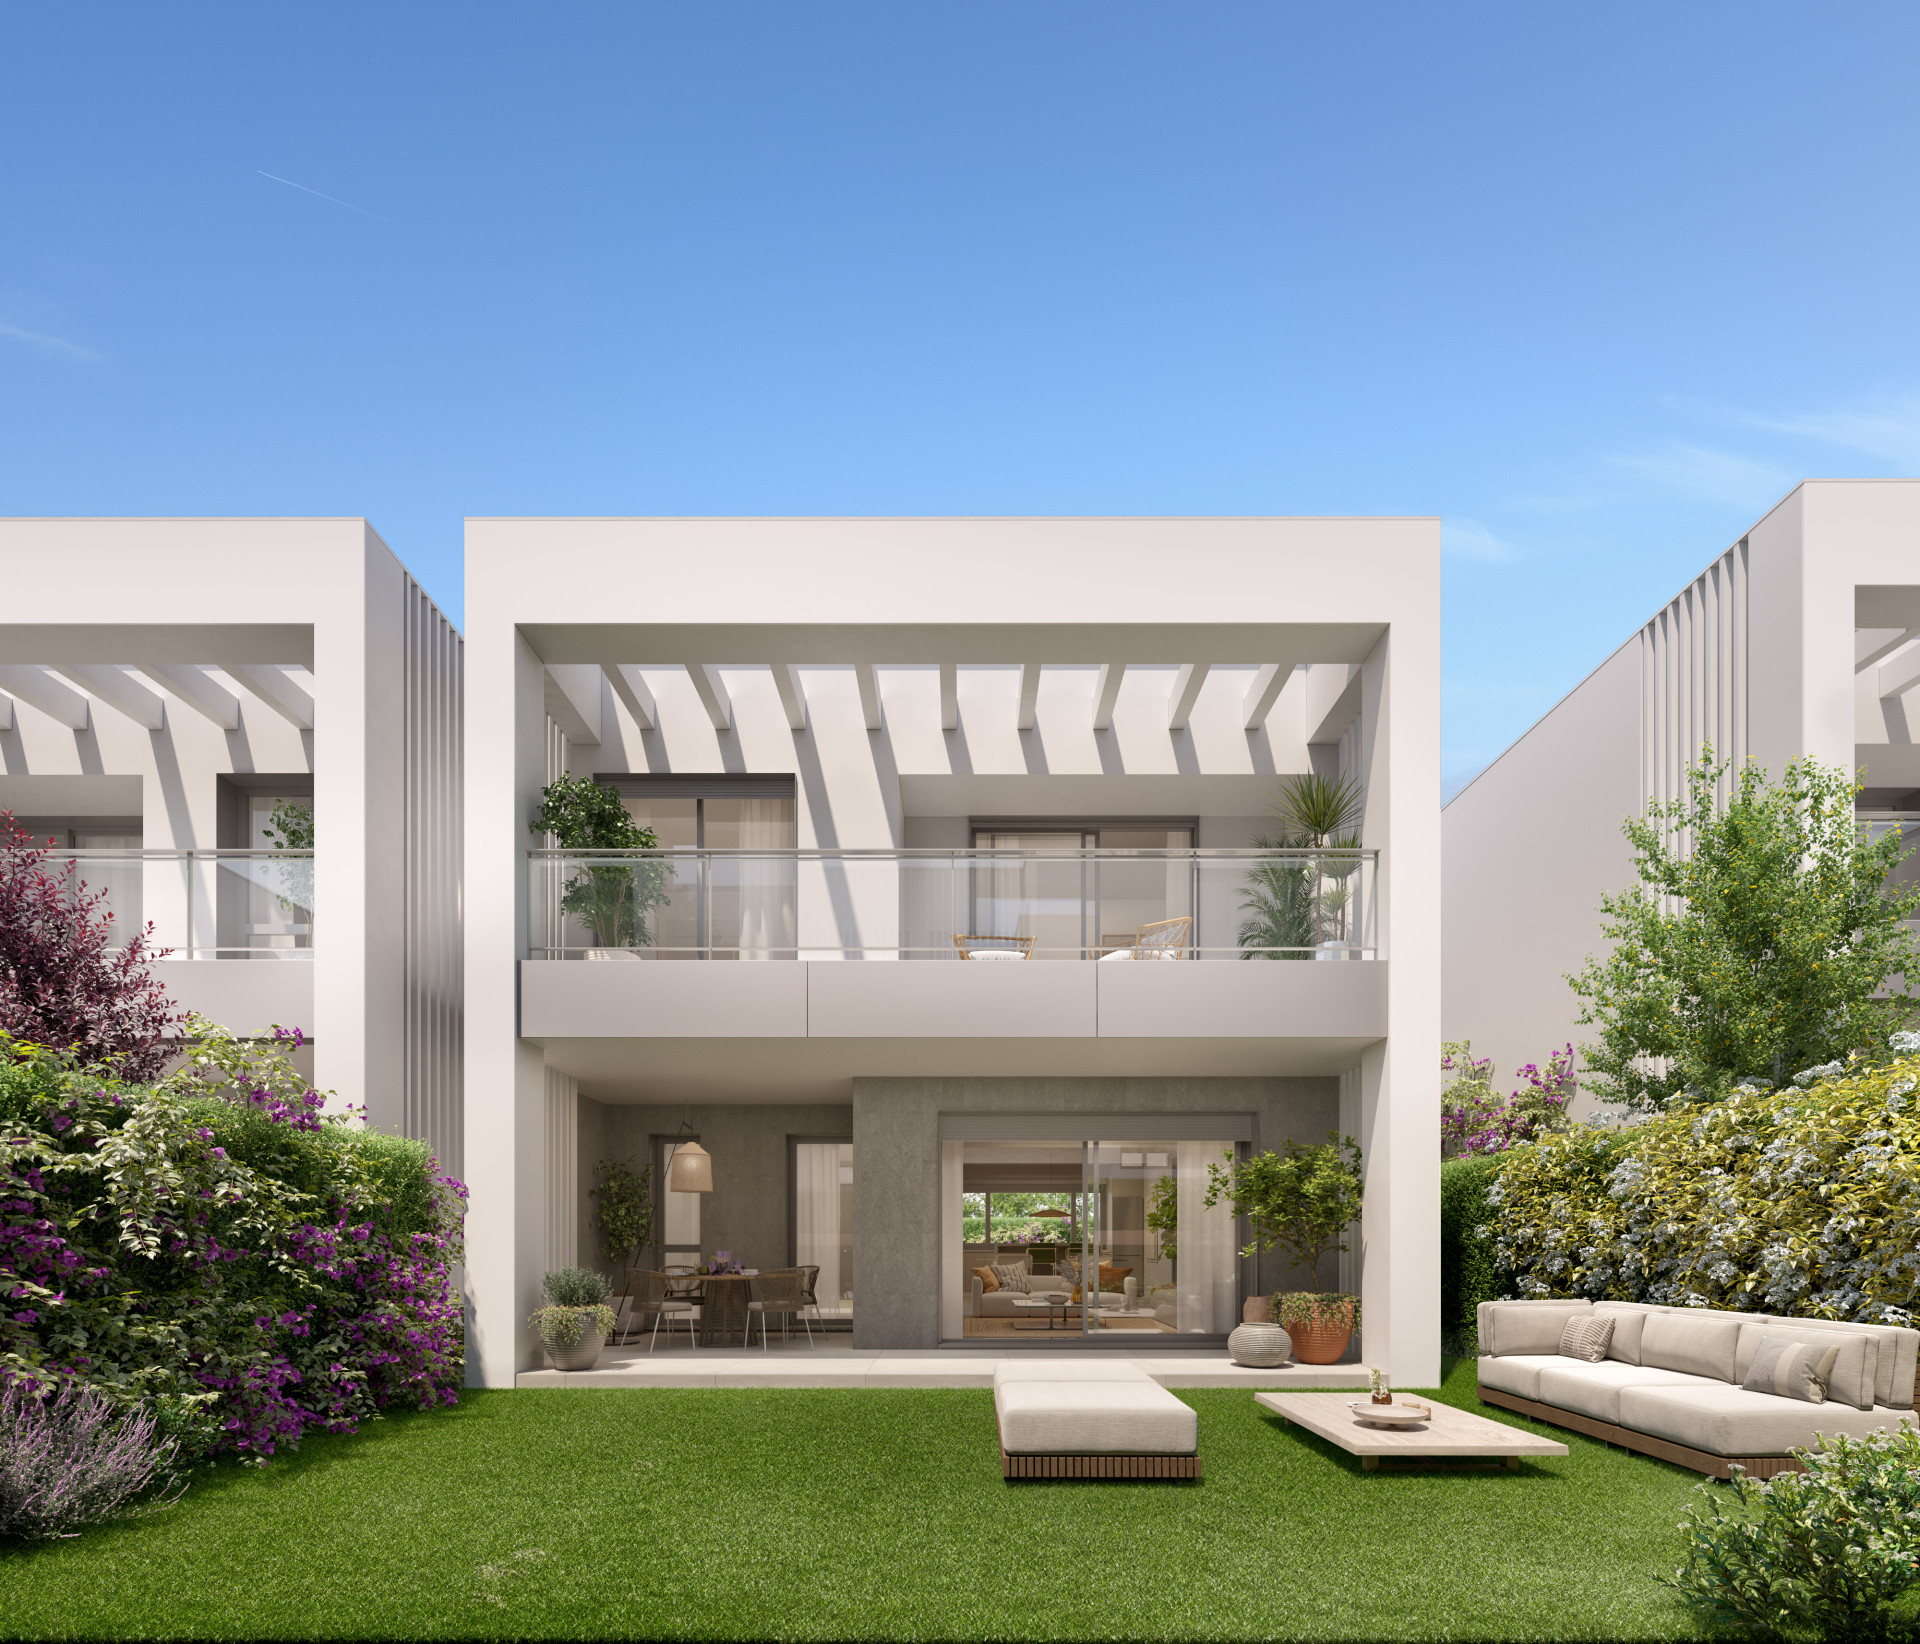 Estrella del Mar Villas: New quality townhouses in Elviria playa, Marbella (last 2 units) | Image 1